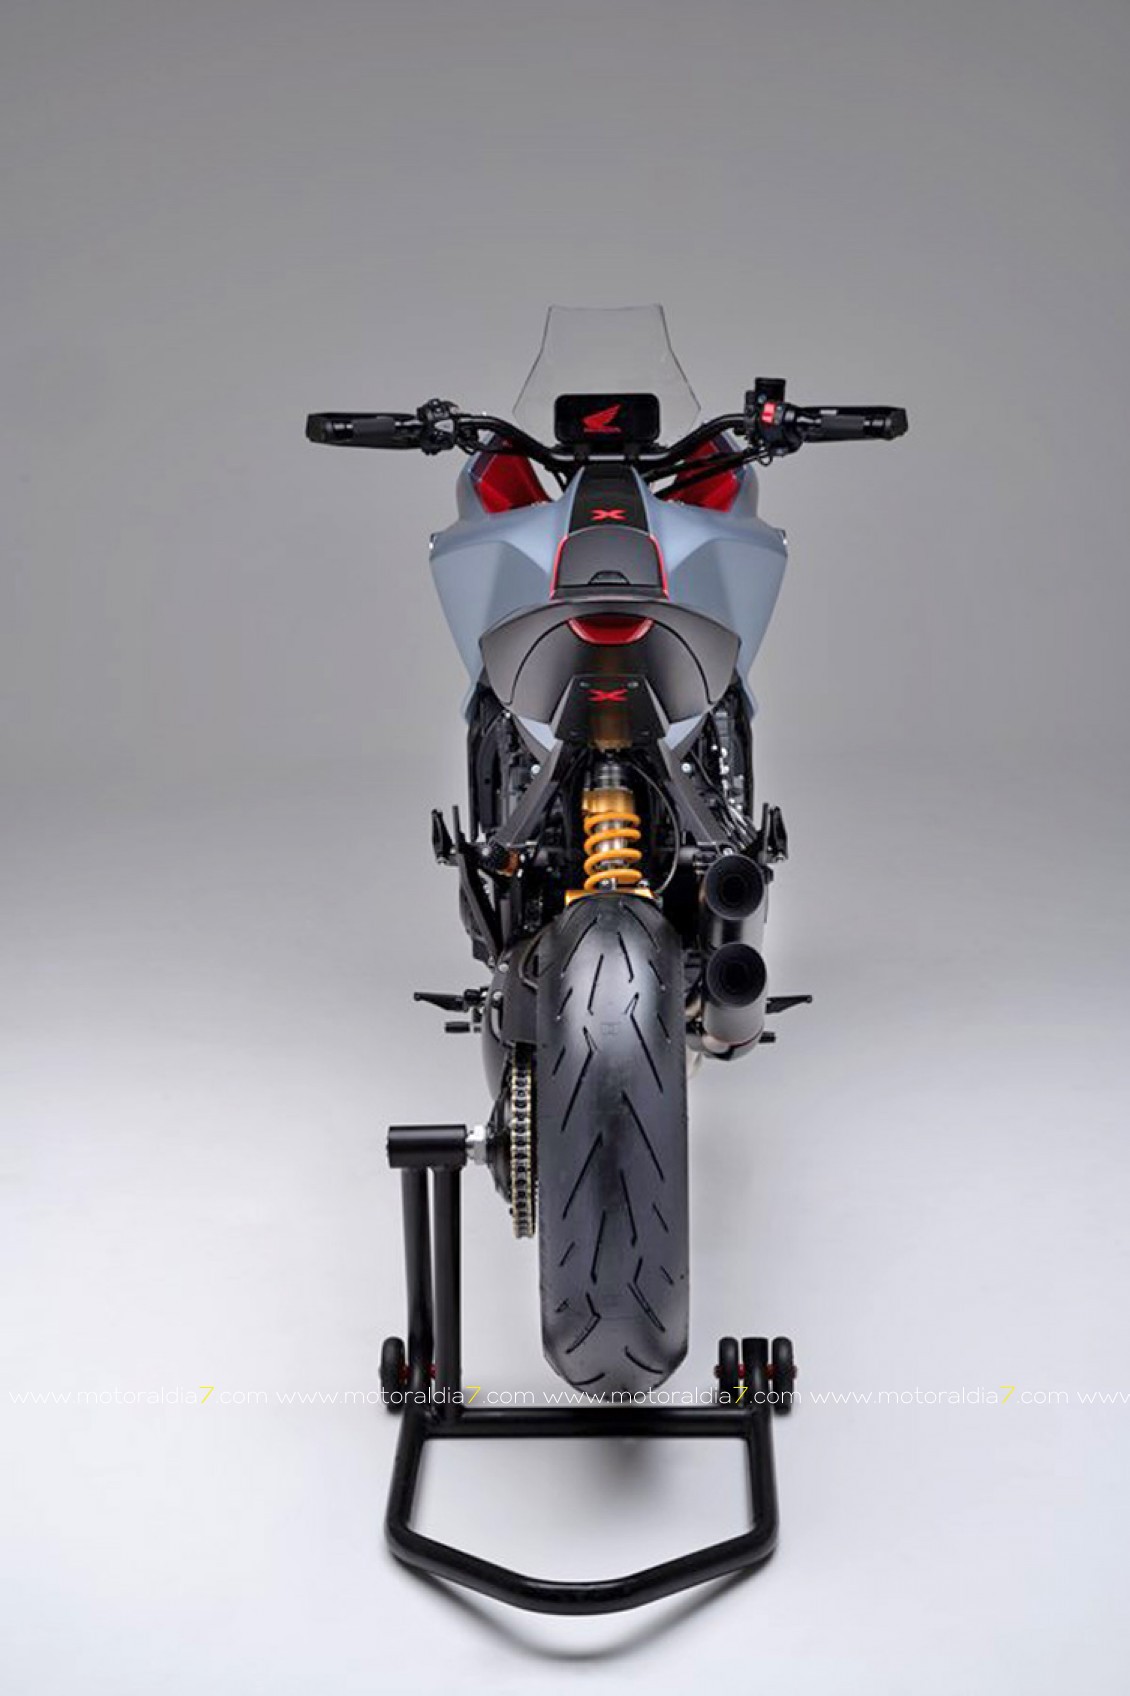 Honda CB4X, un Concept muy valido